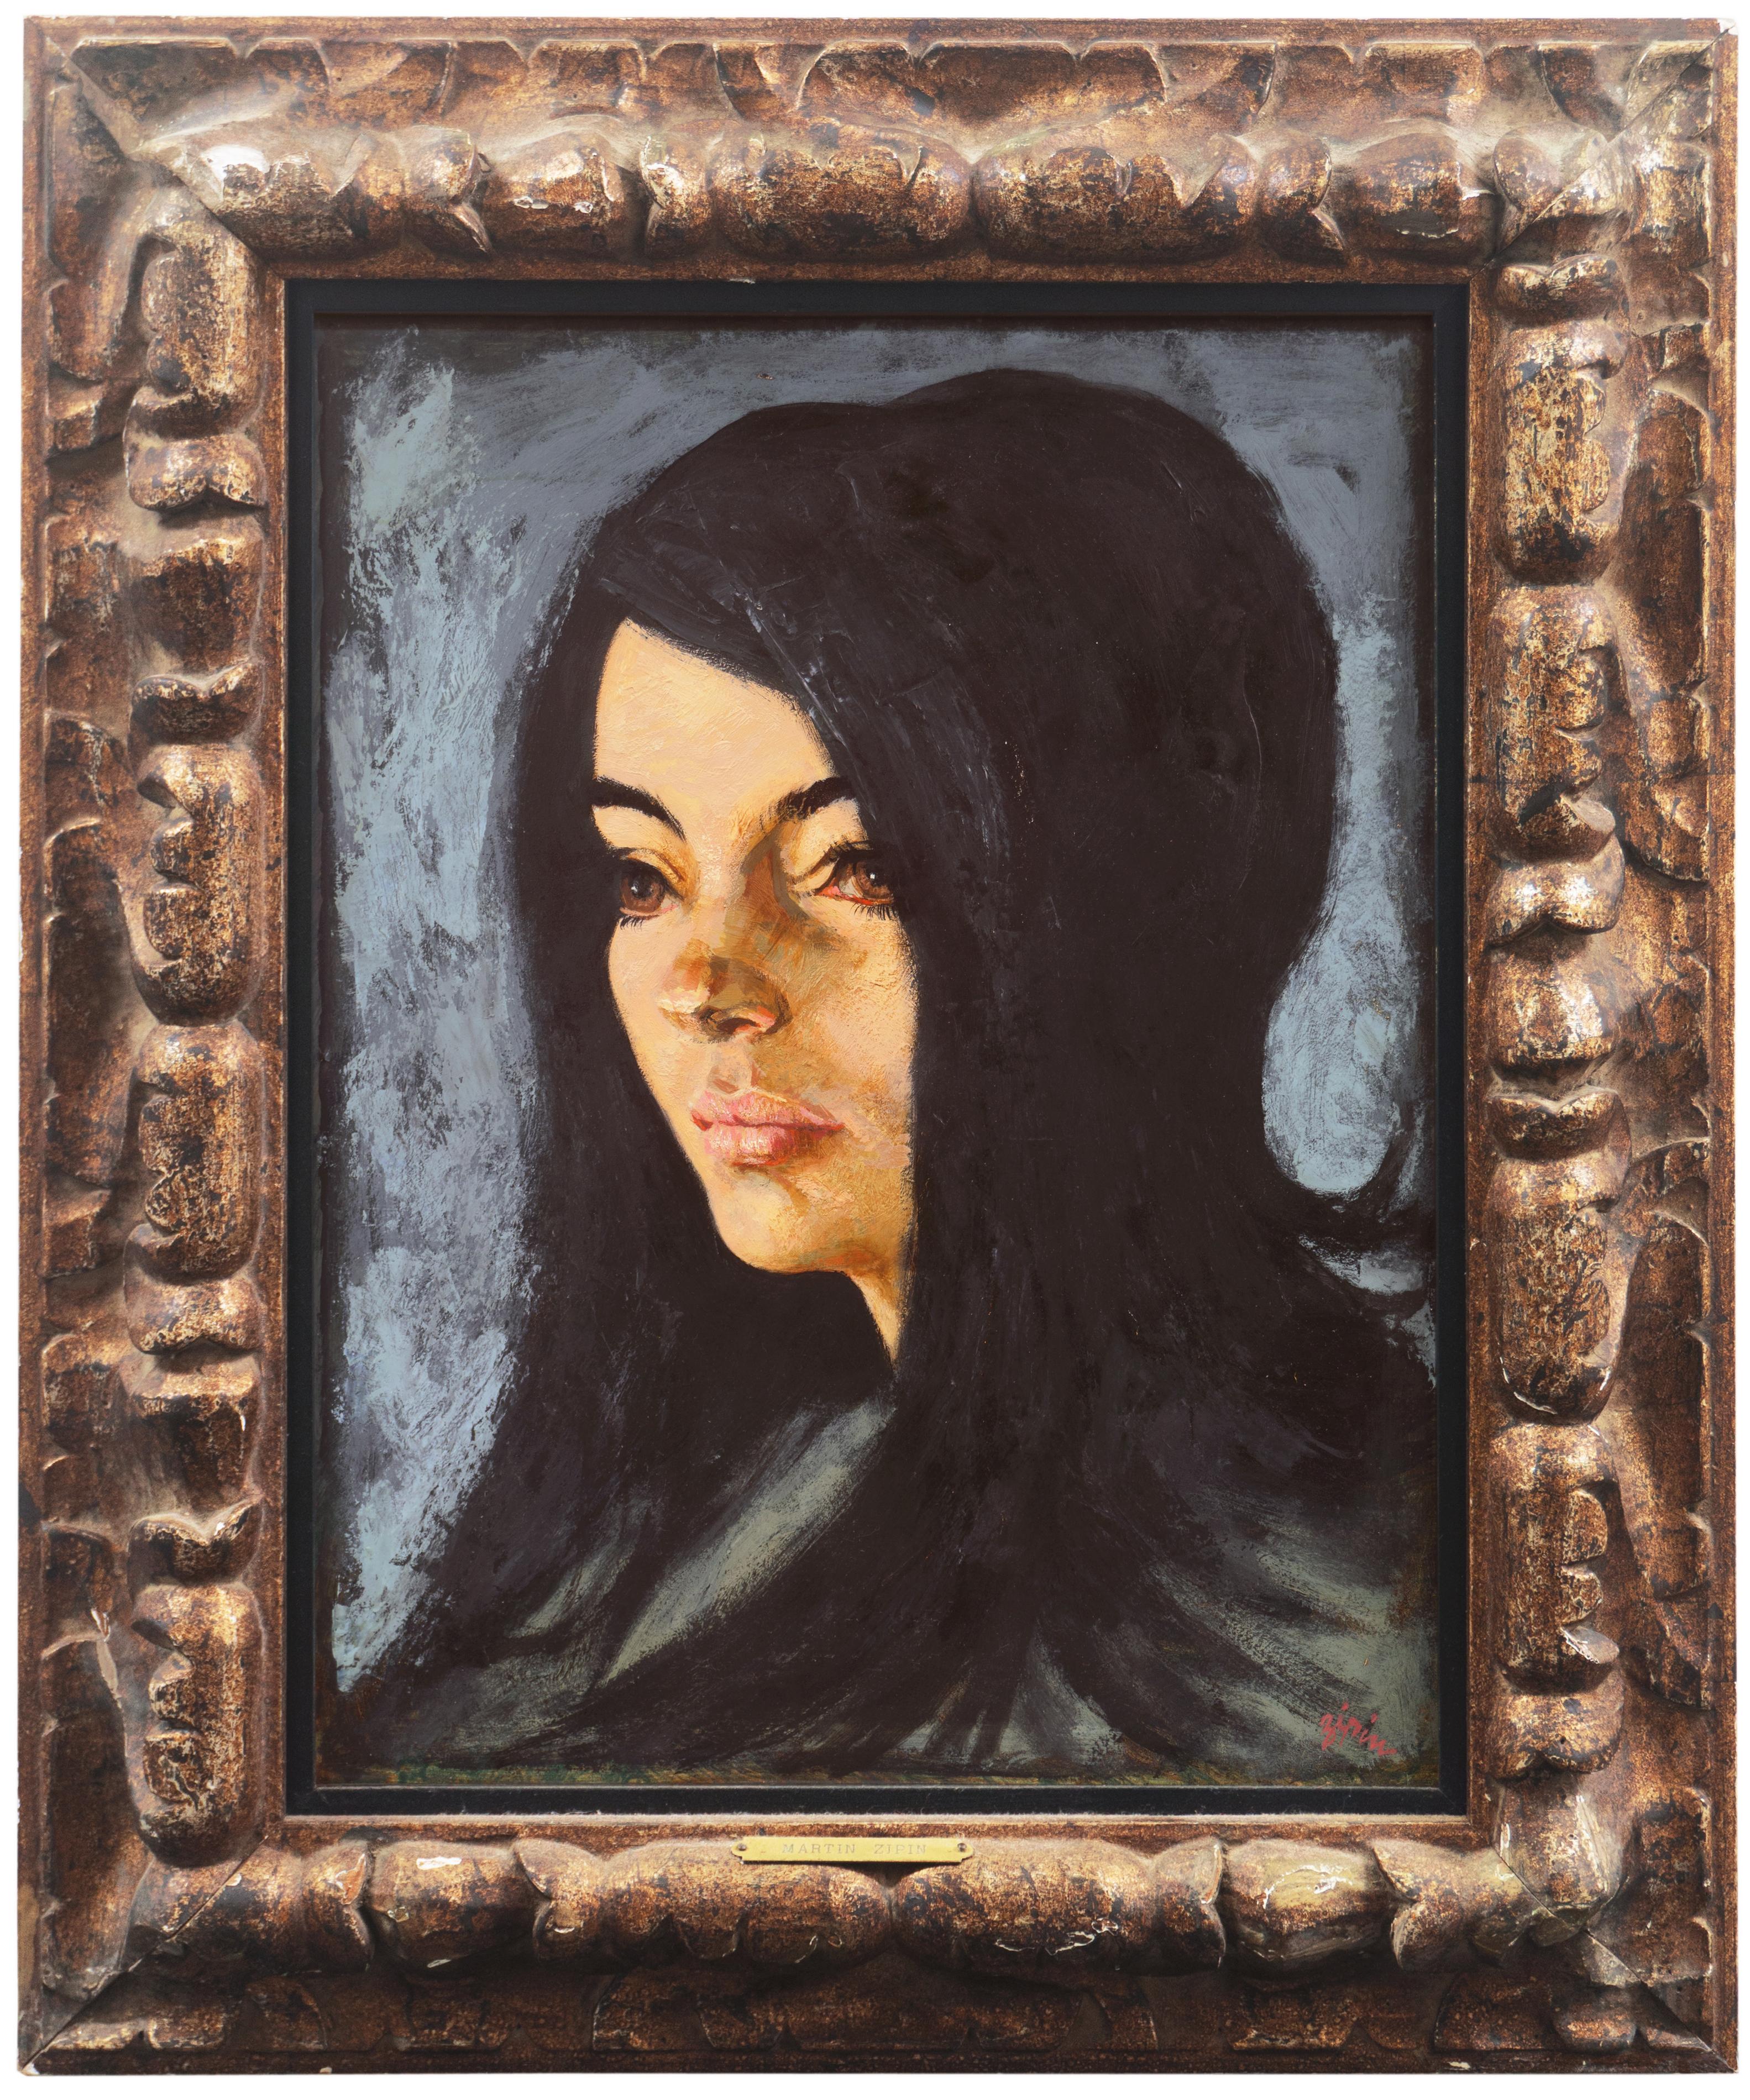 Martin Zipin Figurative Painting - 'Portrait of a Young Woman', Philadelphia Modernist, PAFA, Baum School of Art